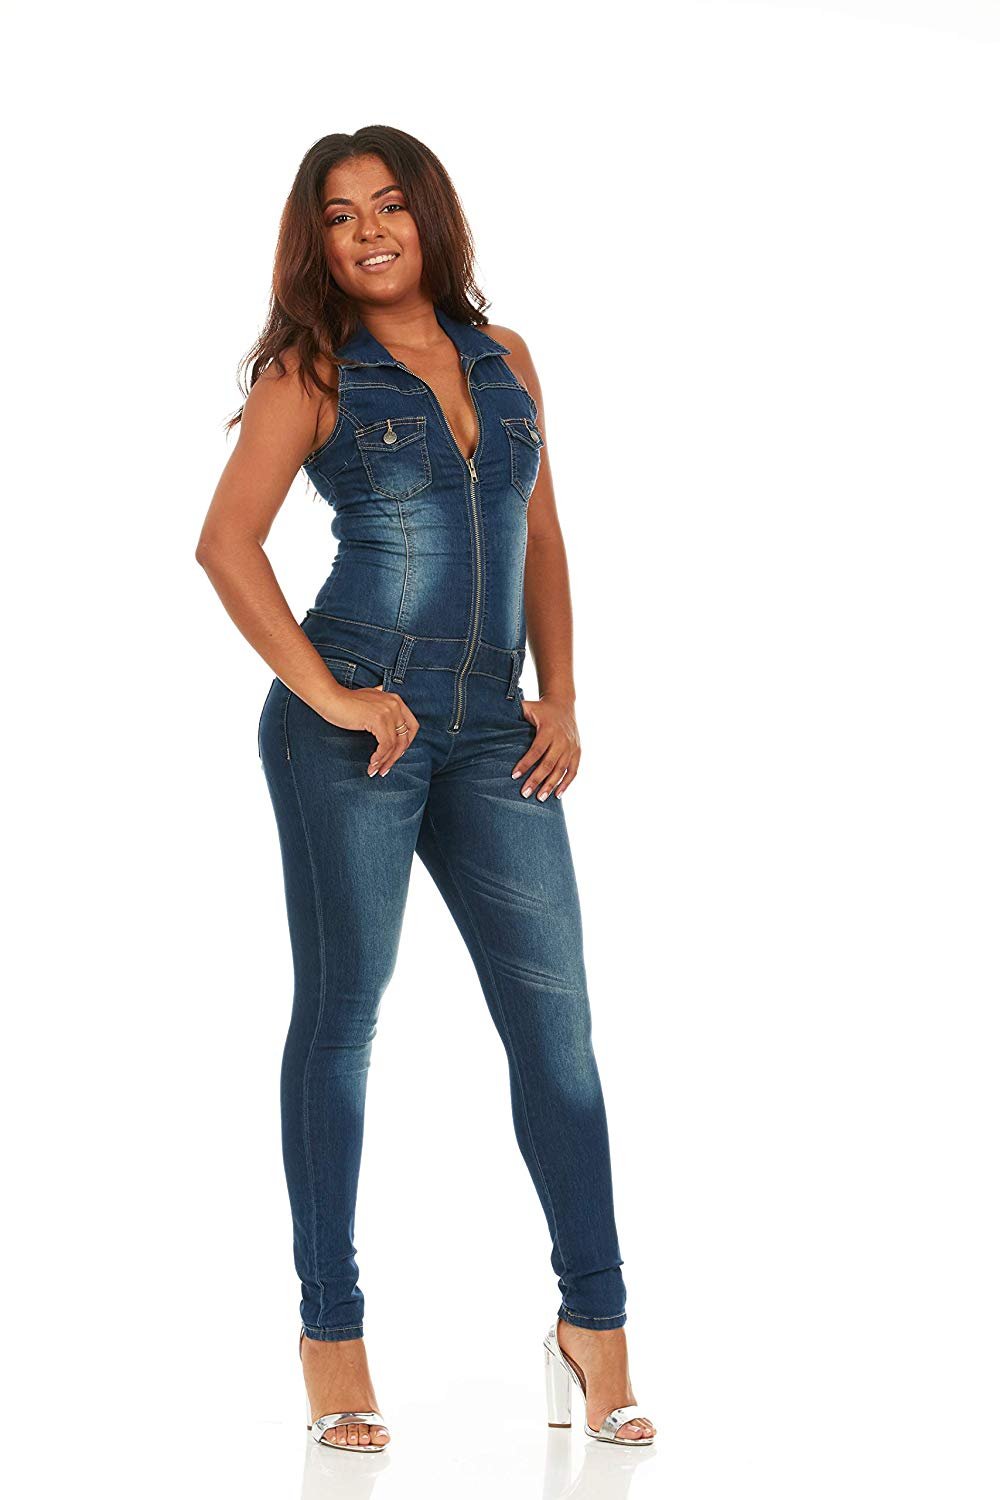 Cute Teen Girl Denim Jumpsuit Jeans for Teen Girls Sleeveless Skinny Fit Overall Plus Size 20W Dark Blue Denim - image 1 of 6